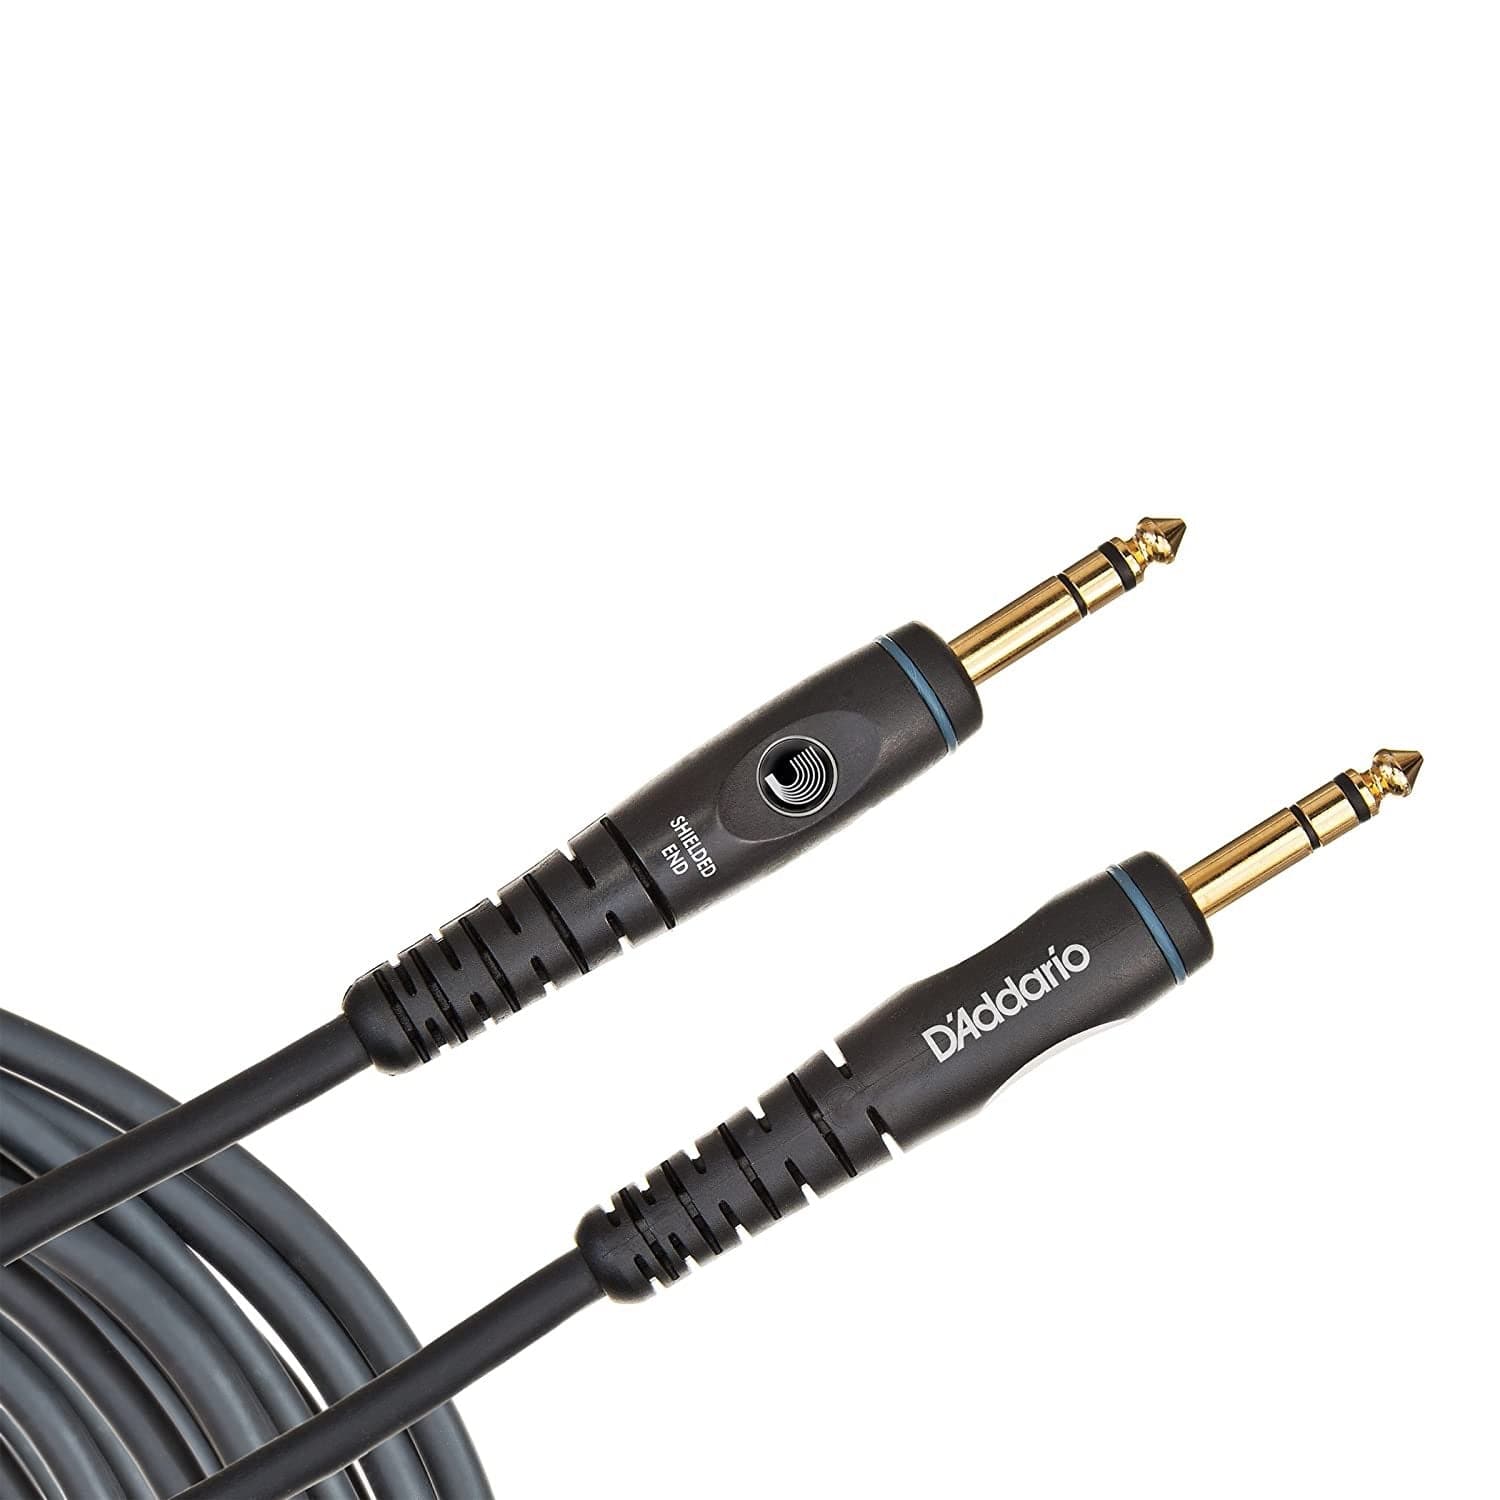 D'Addario Custom Series Stereo Instrument Cable - 10foot (3meters)